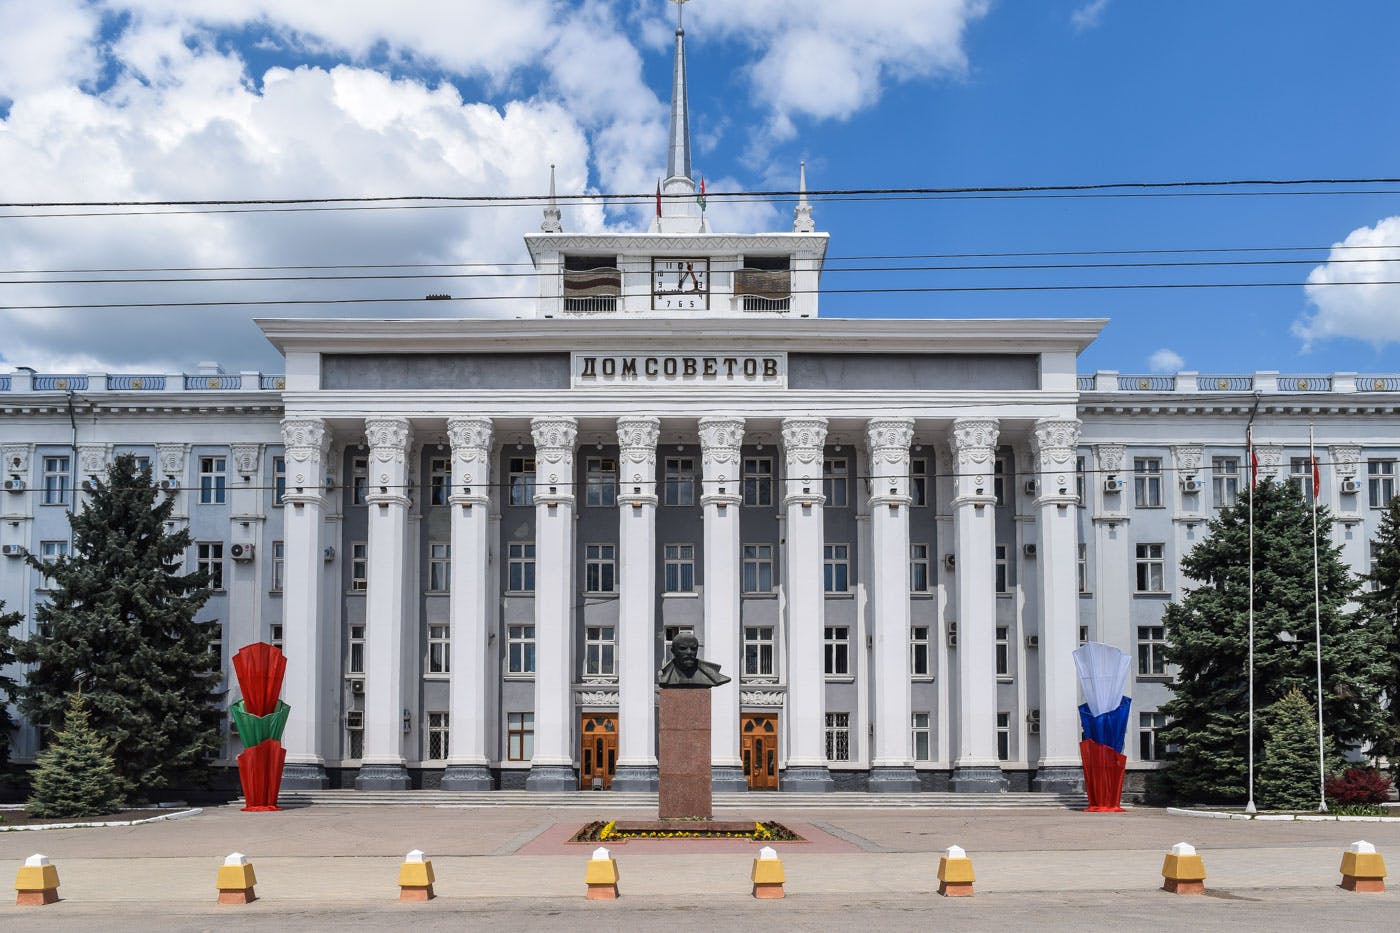 Transnistria tour from Chisinau Musement